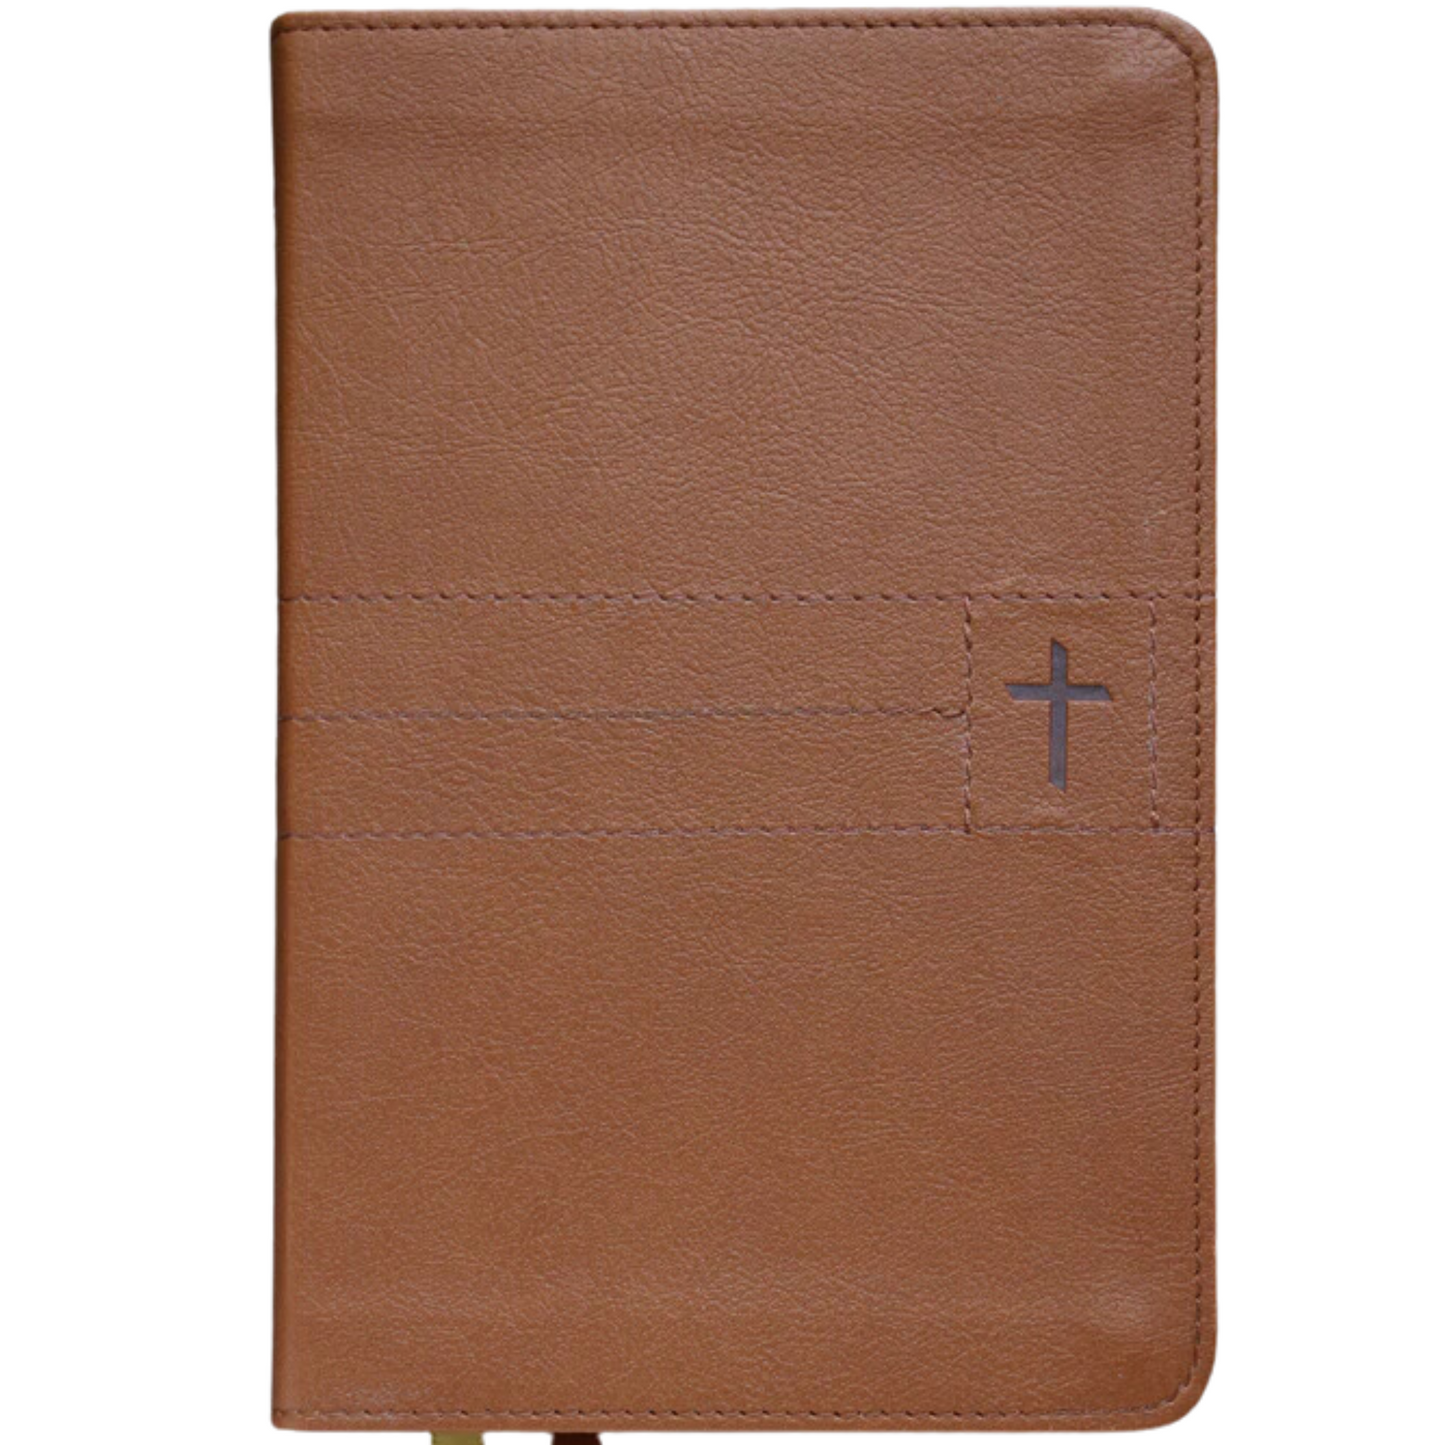 NIV Thinline Bible, Compact